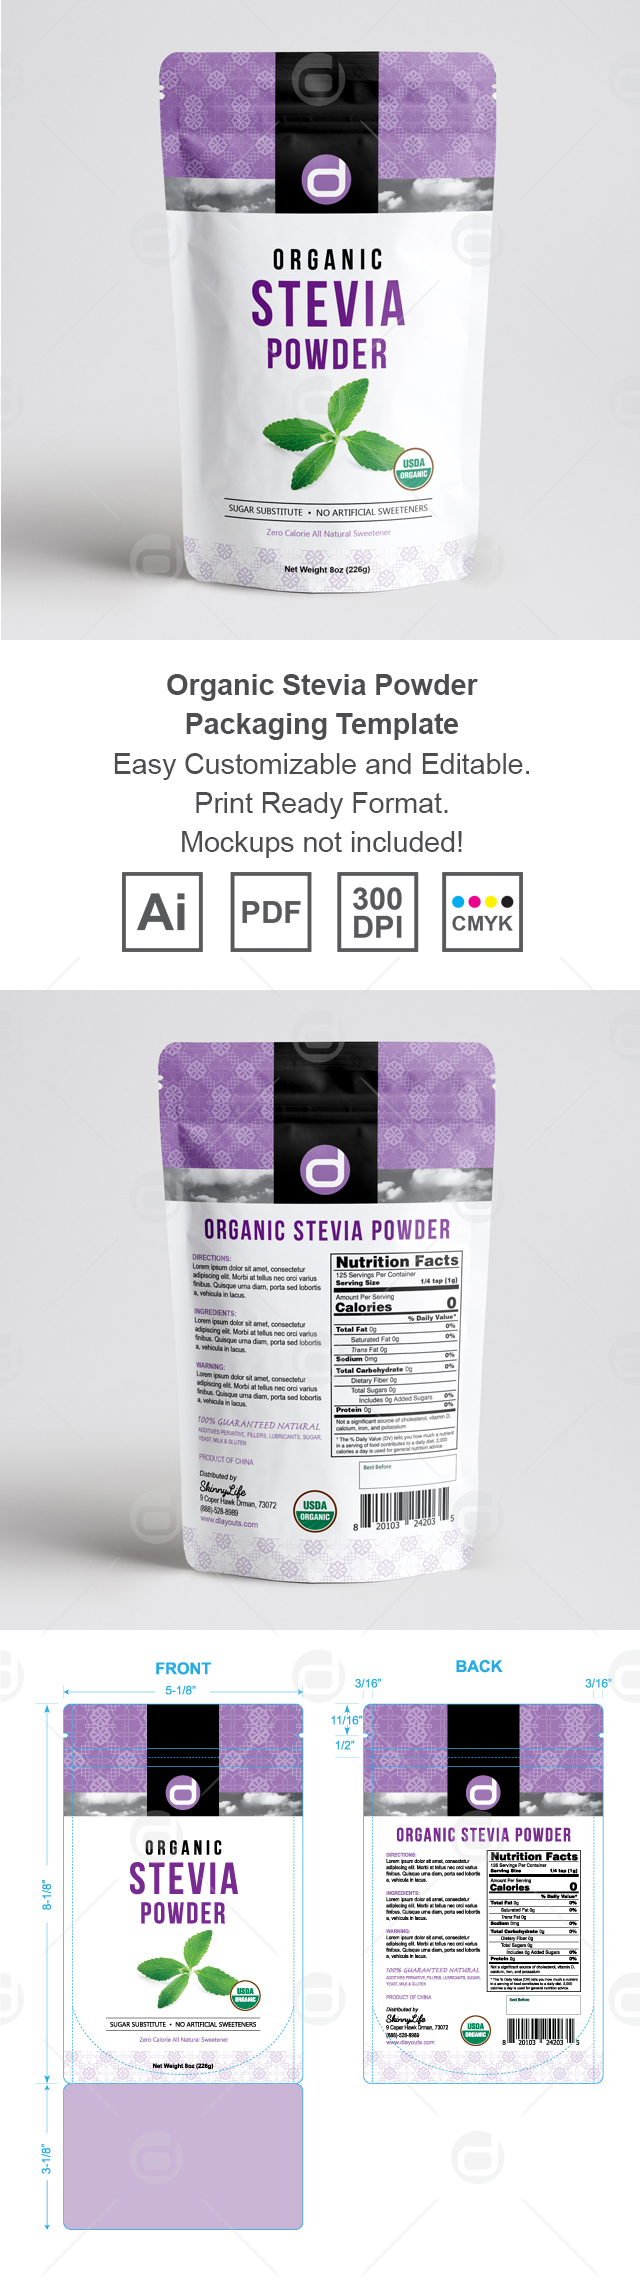 Organic Stevia Powder Packaging Template